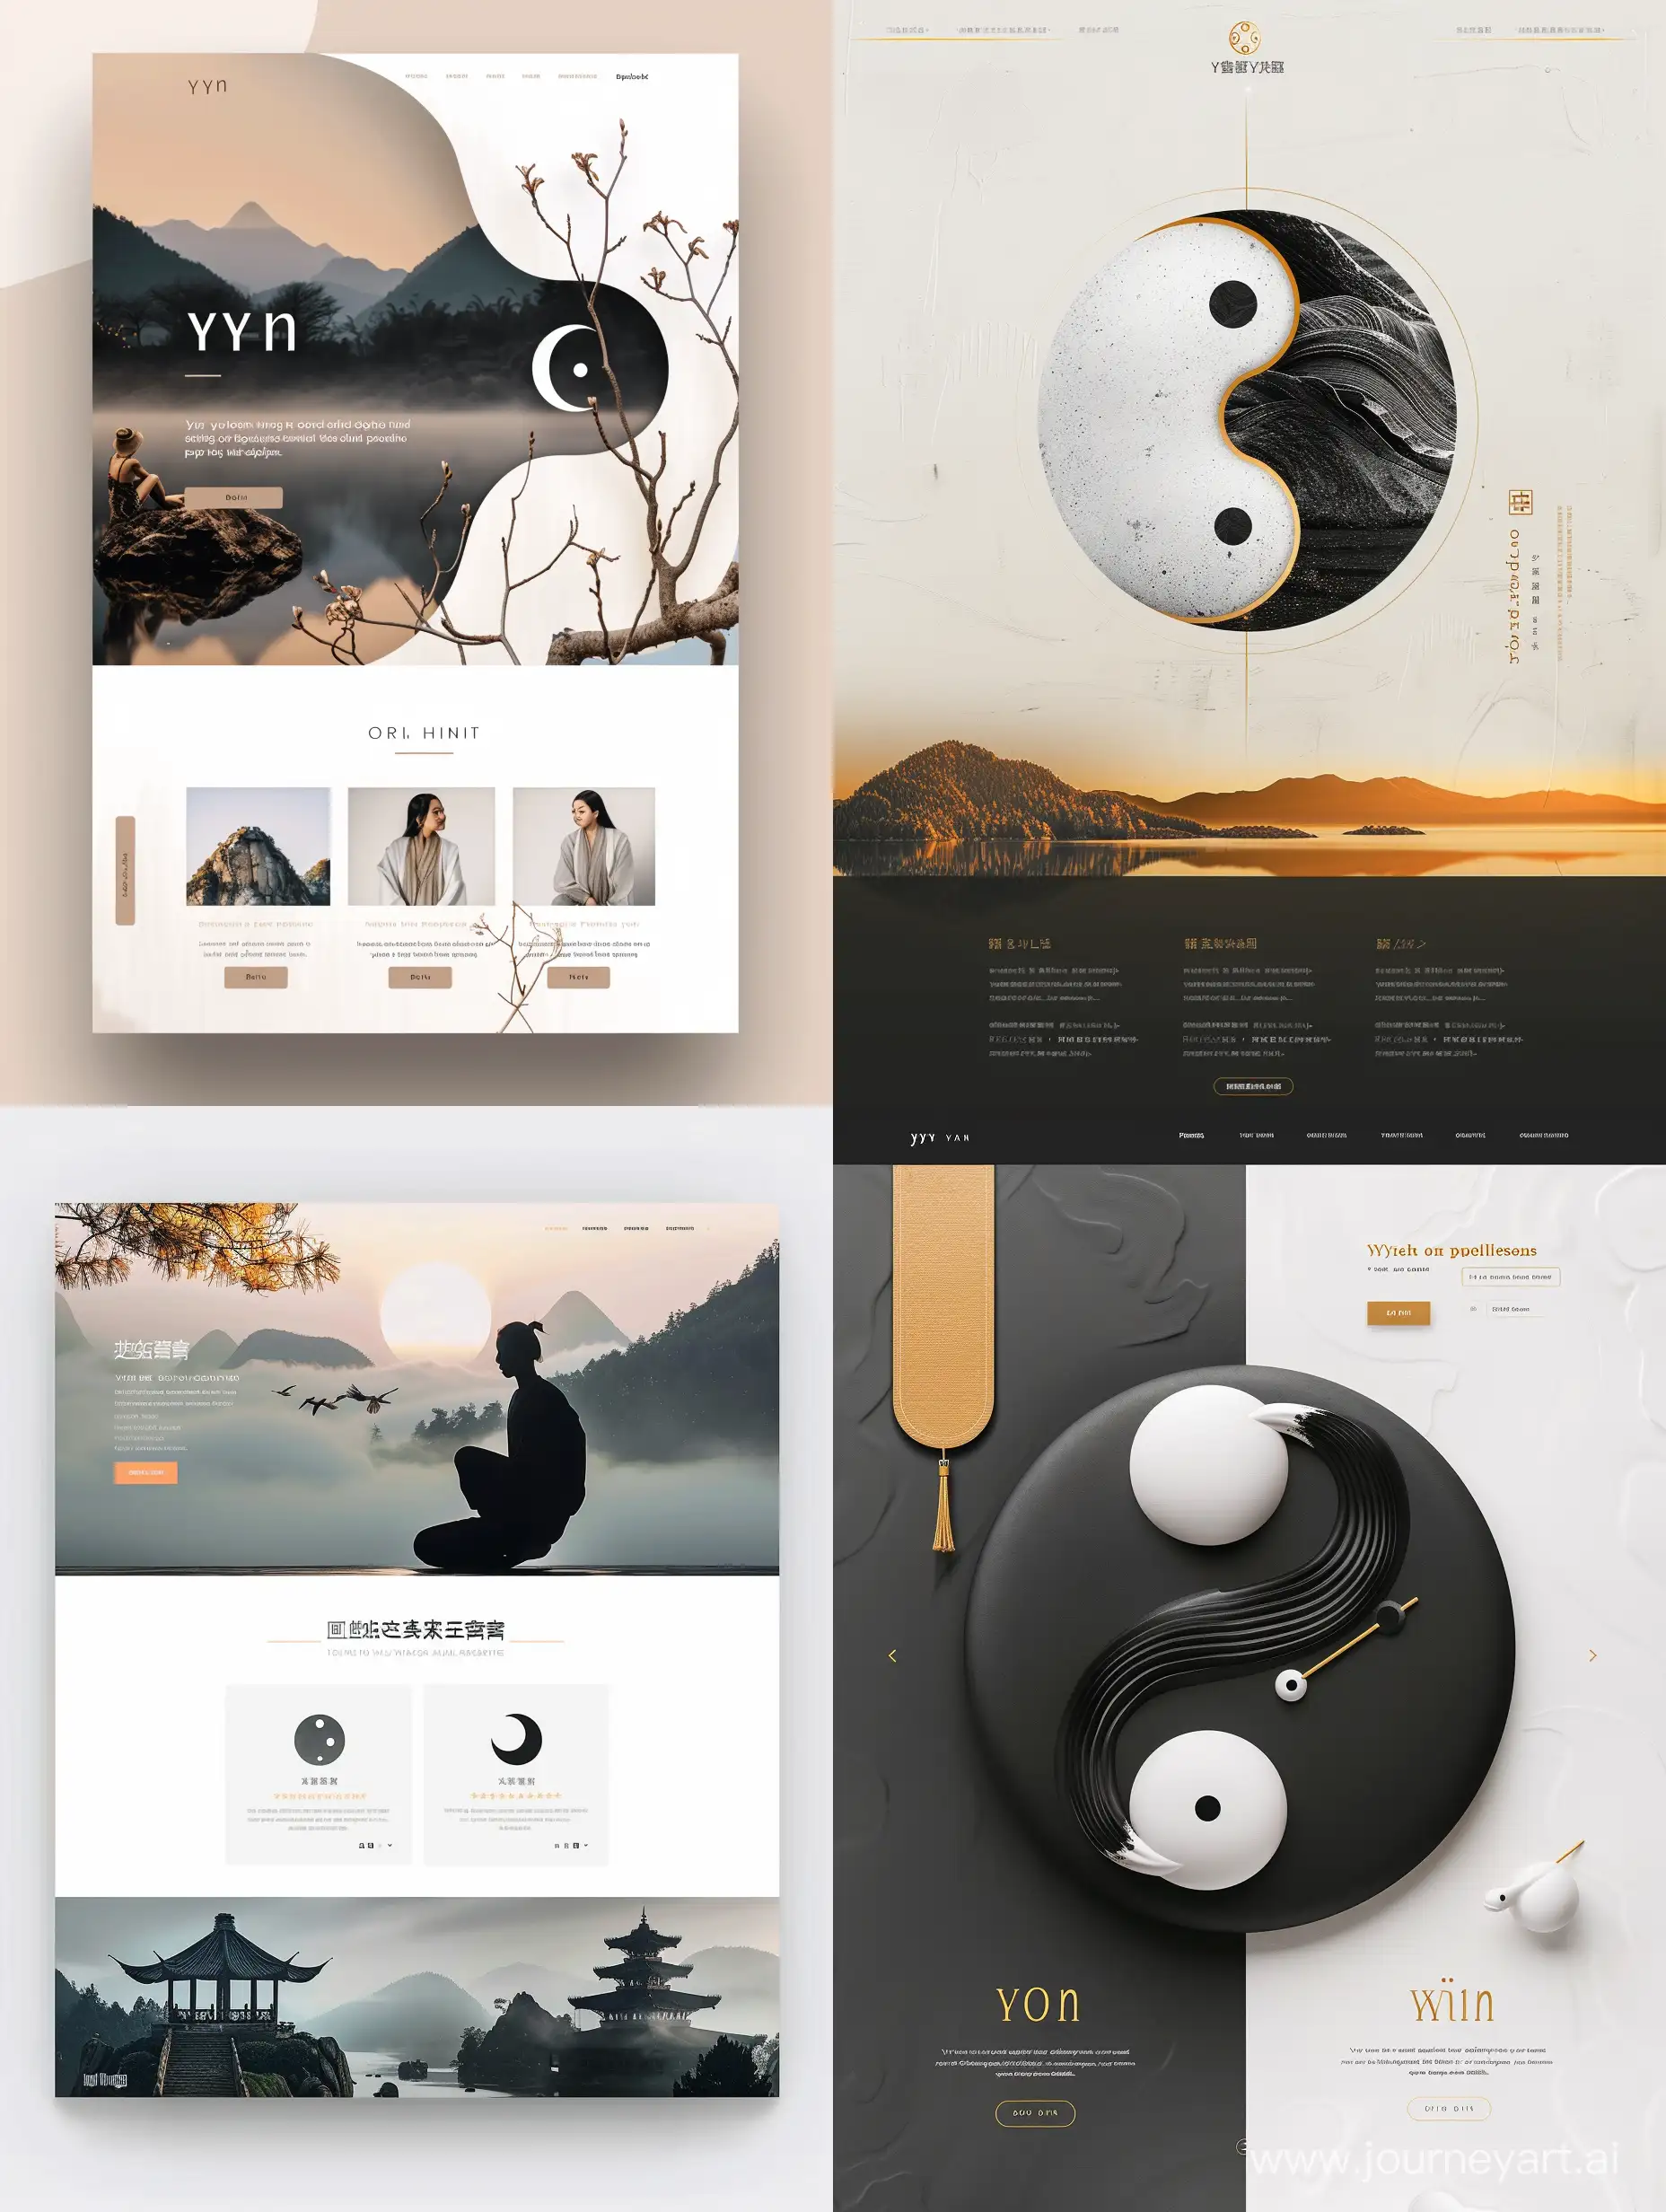 yin yang landing page for booking